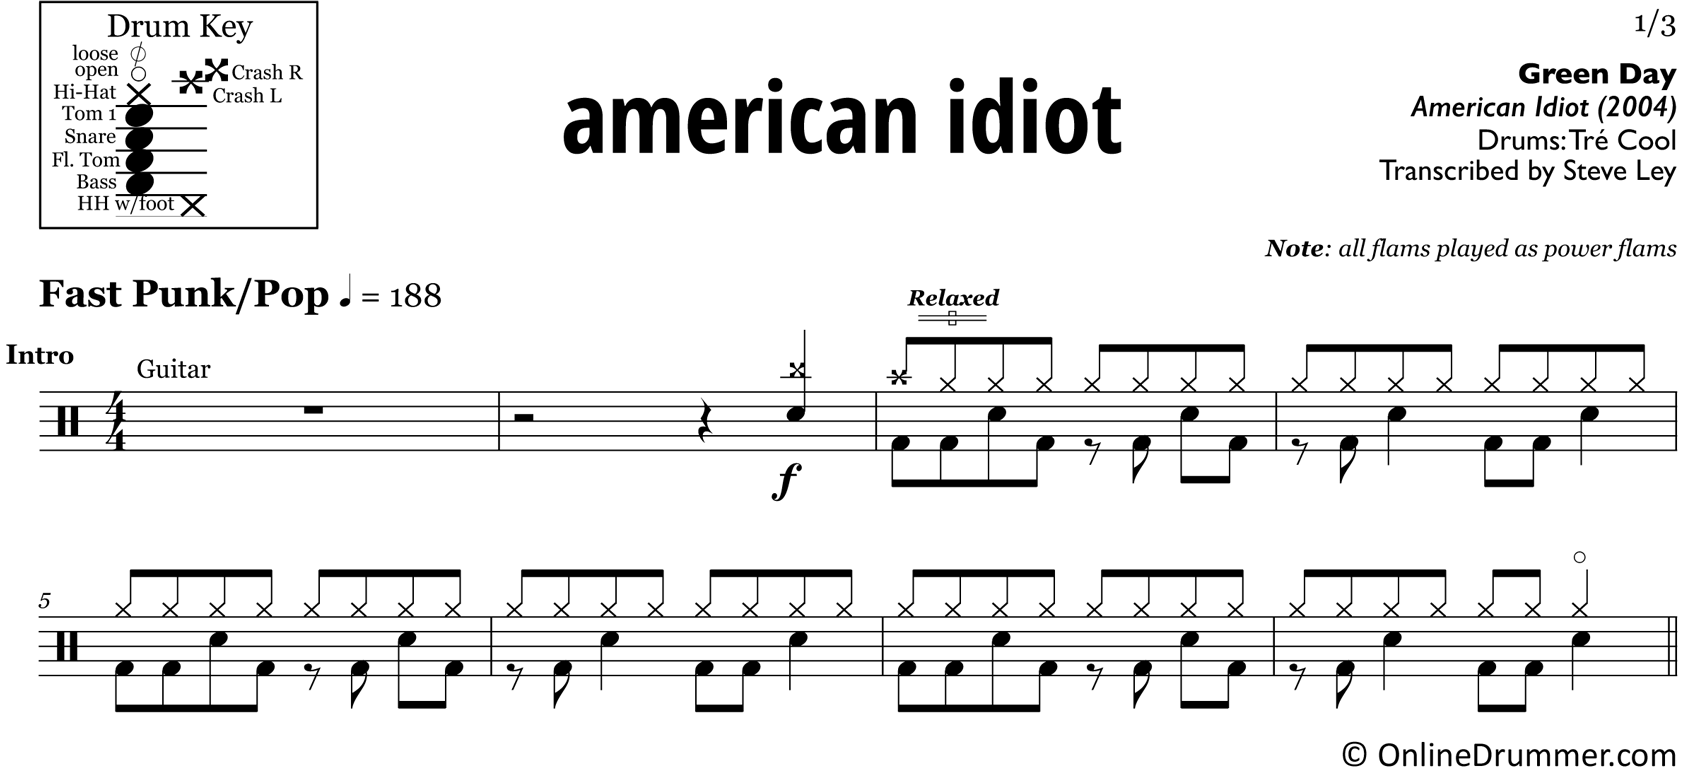 Green Day - American Idiot - Drumless (Sem Bateria / No Drum) 